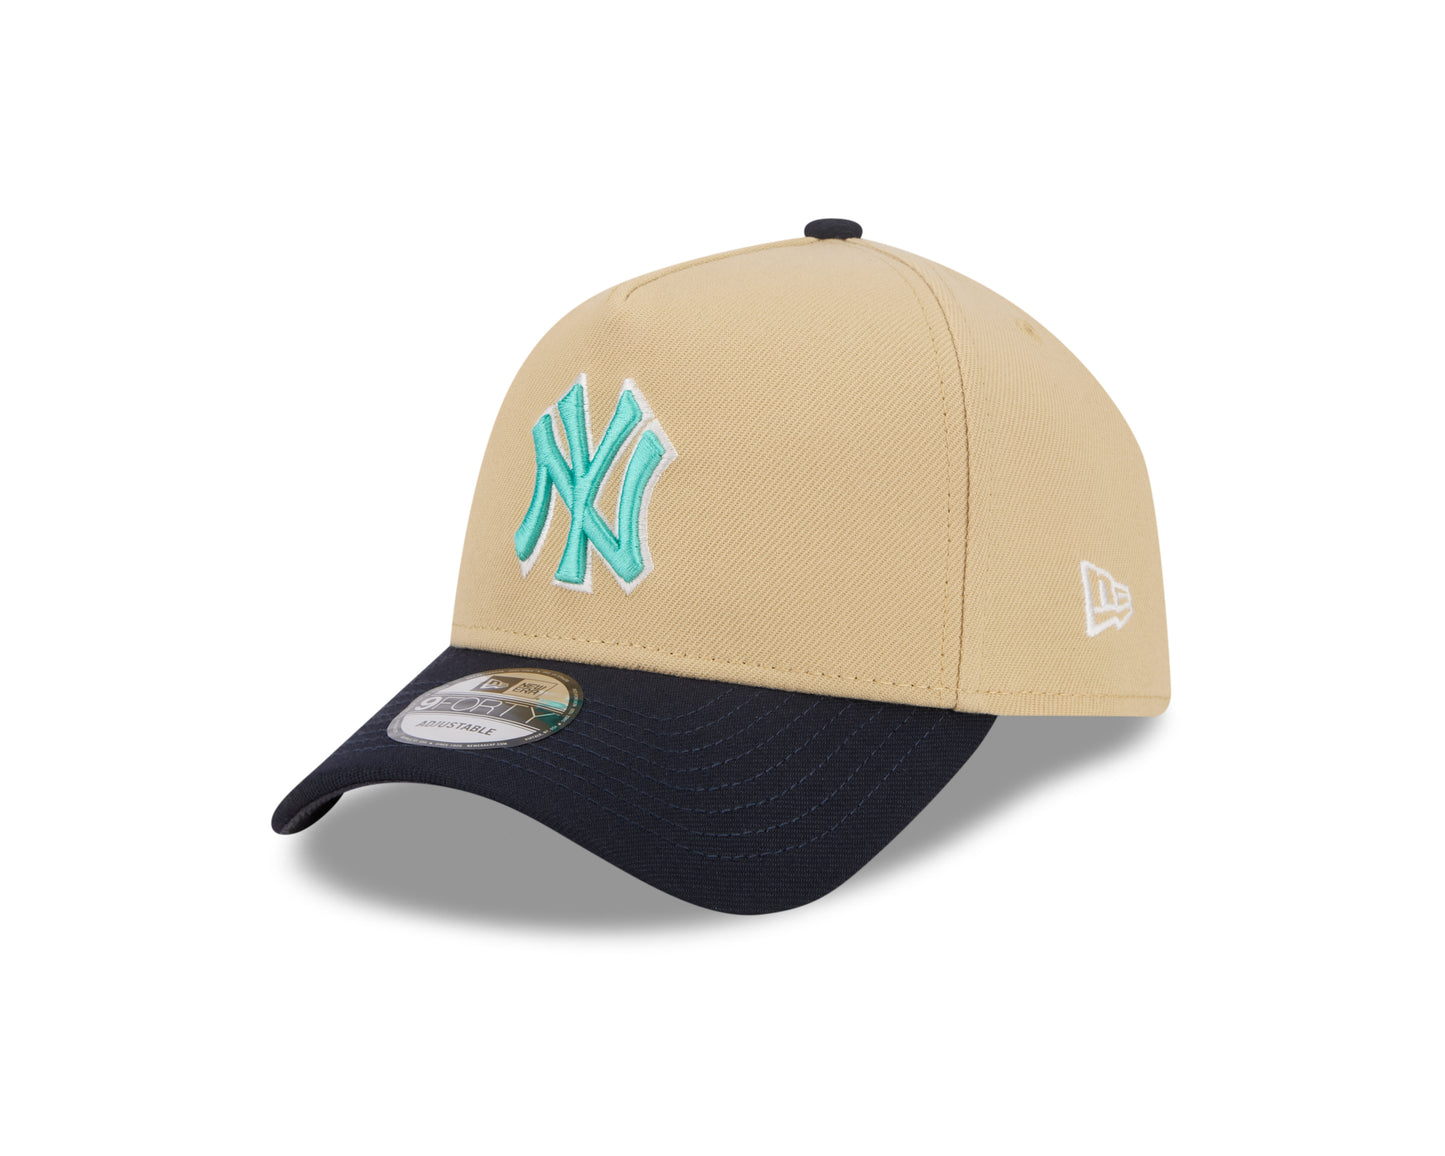 New Era - New York Yankees - City Side Patch - 9forty A-Frame Cap - Light Beige - Headz Up 